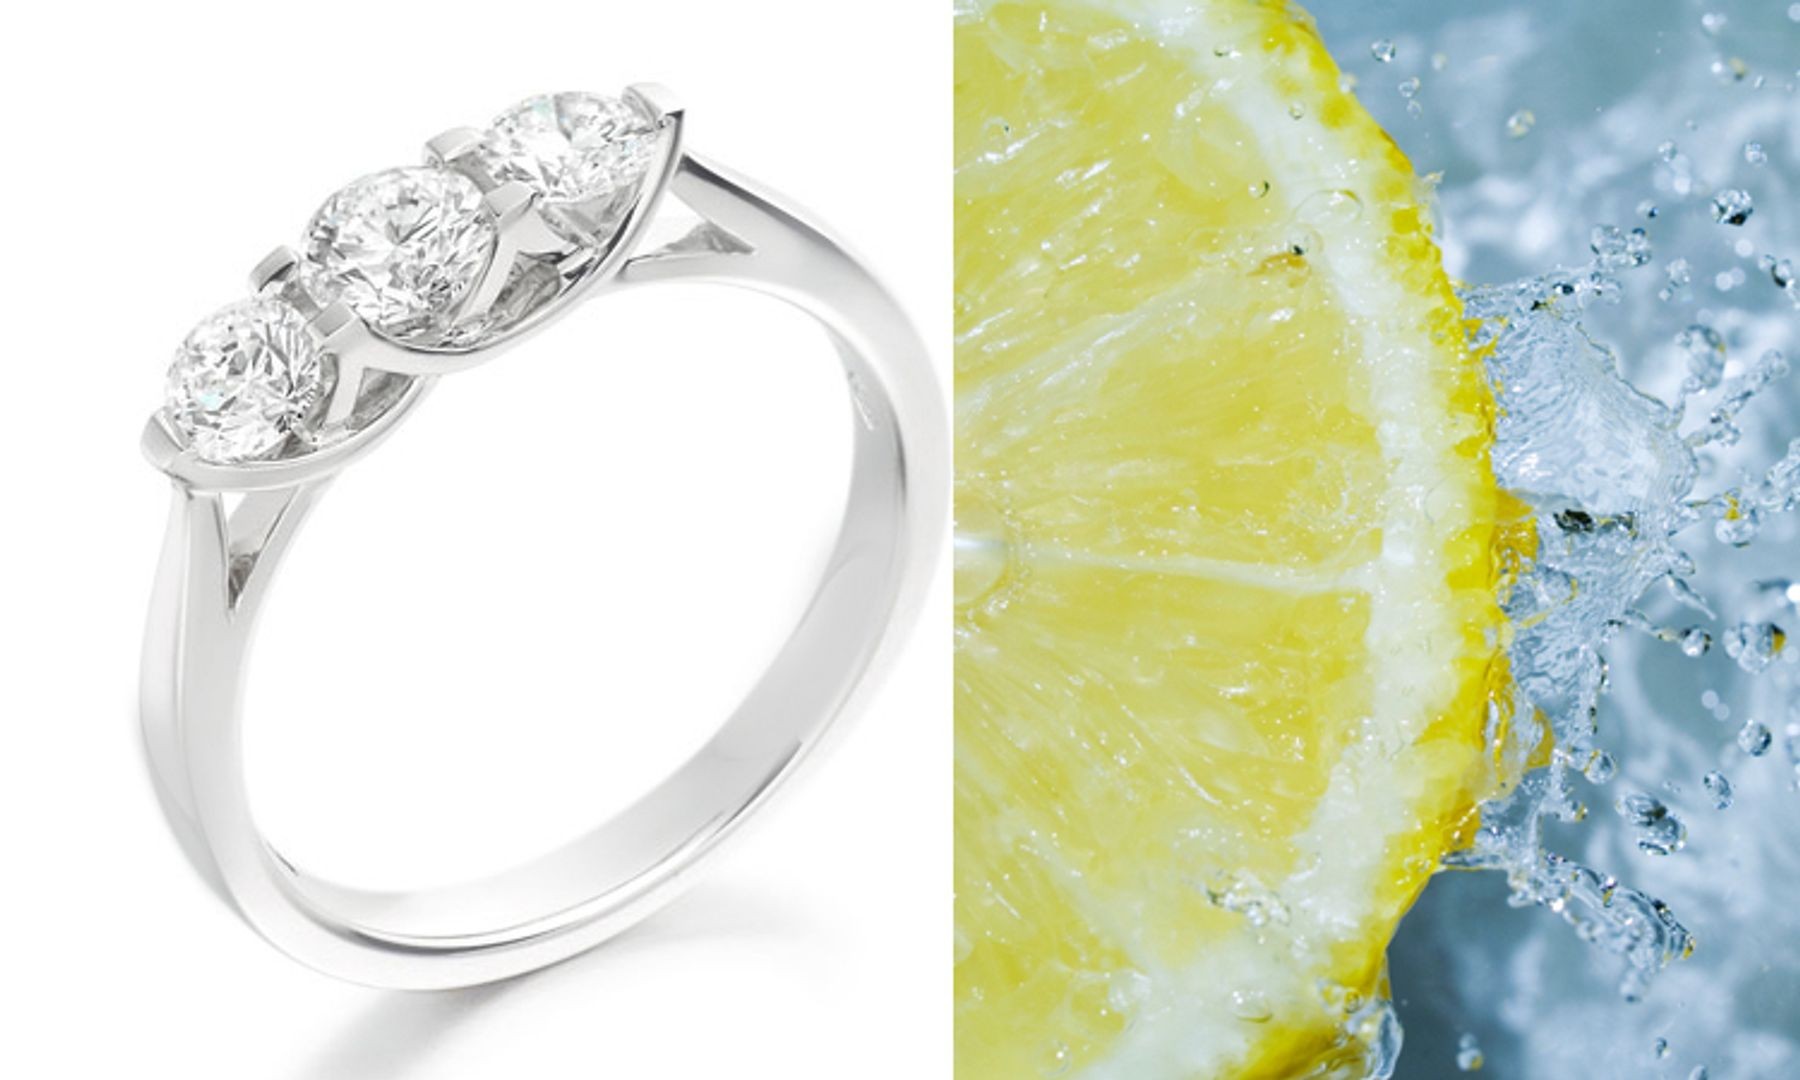 Unique Diamond Ring: Three-Stone (Ring with Three Round Diamonds) Rings in Platinum & 14K White Yellow Gold. 